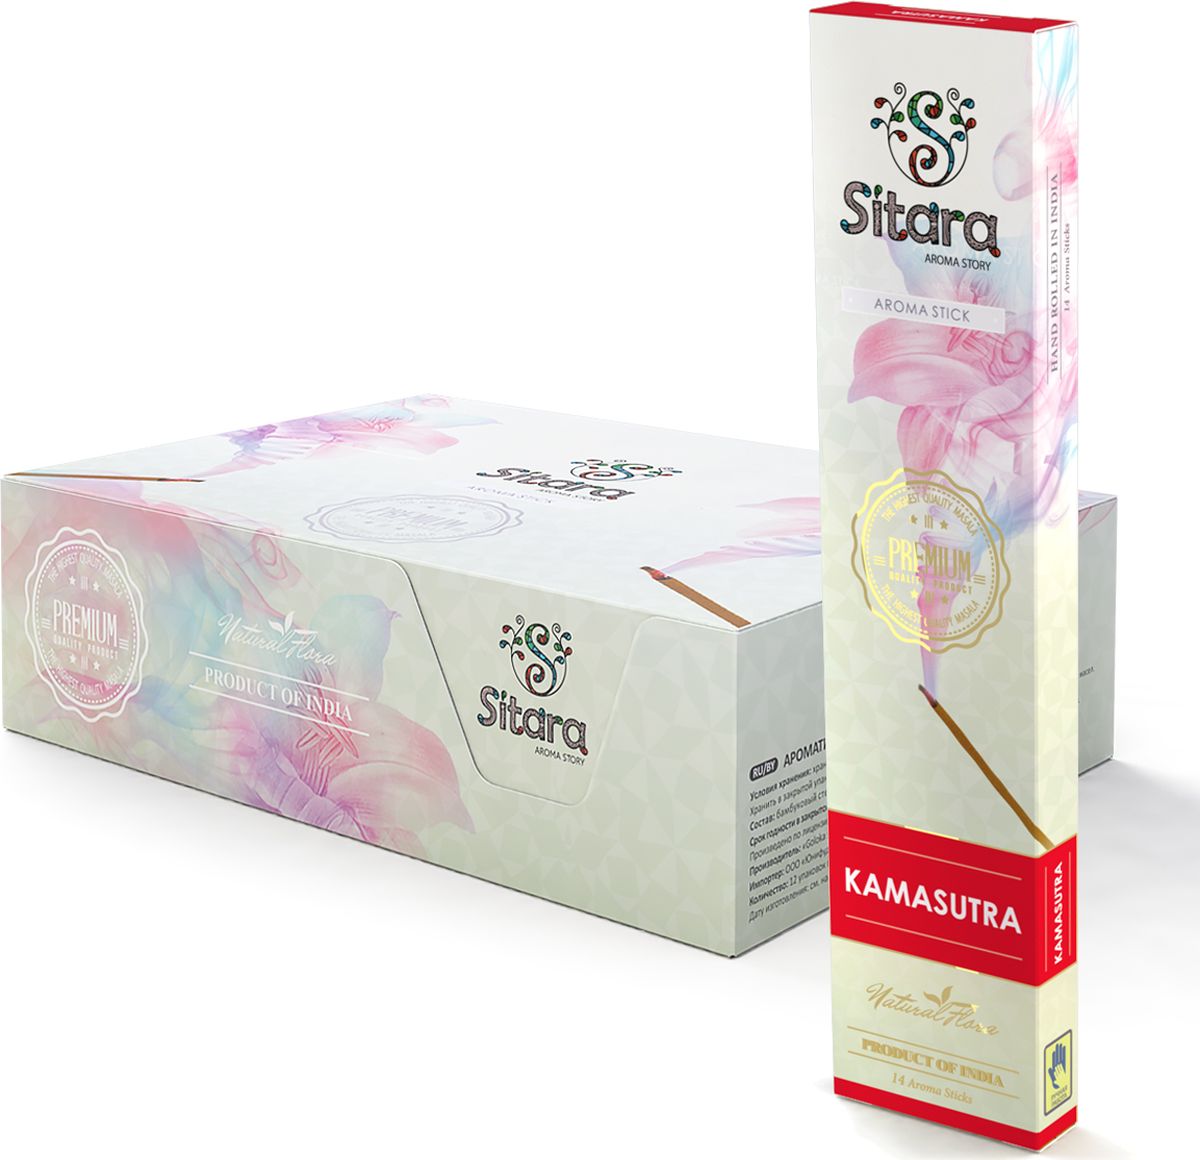 Ароматические палочки Sitara Premium 